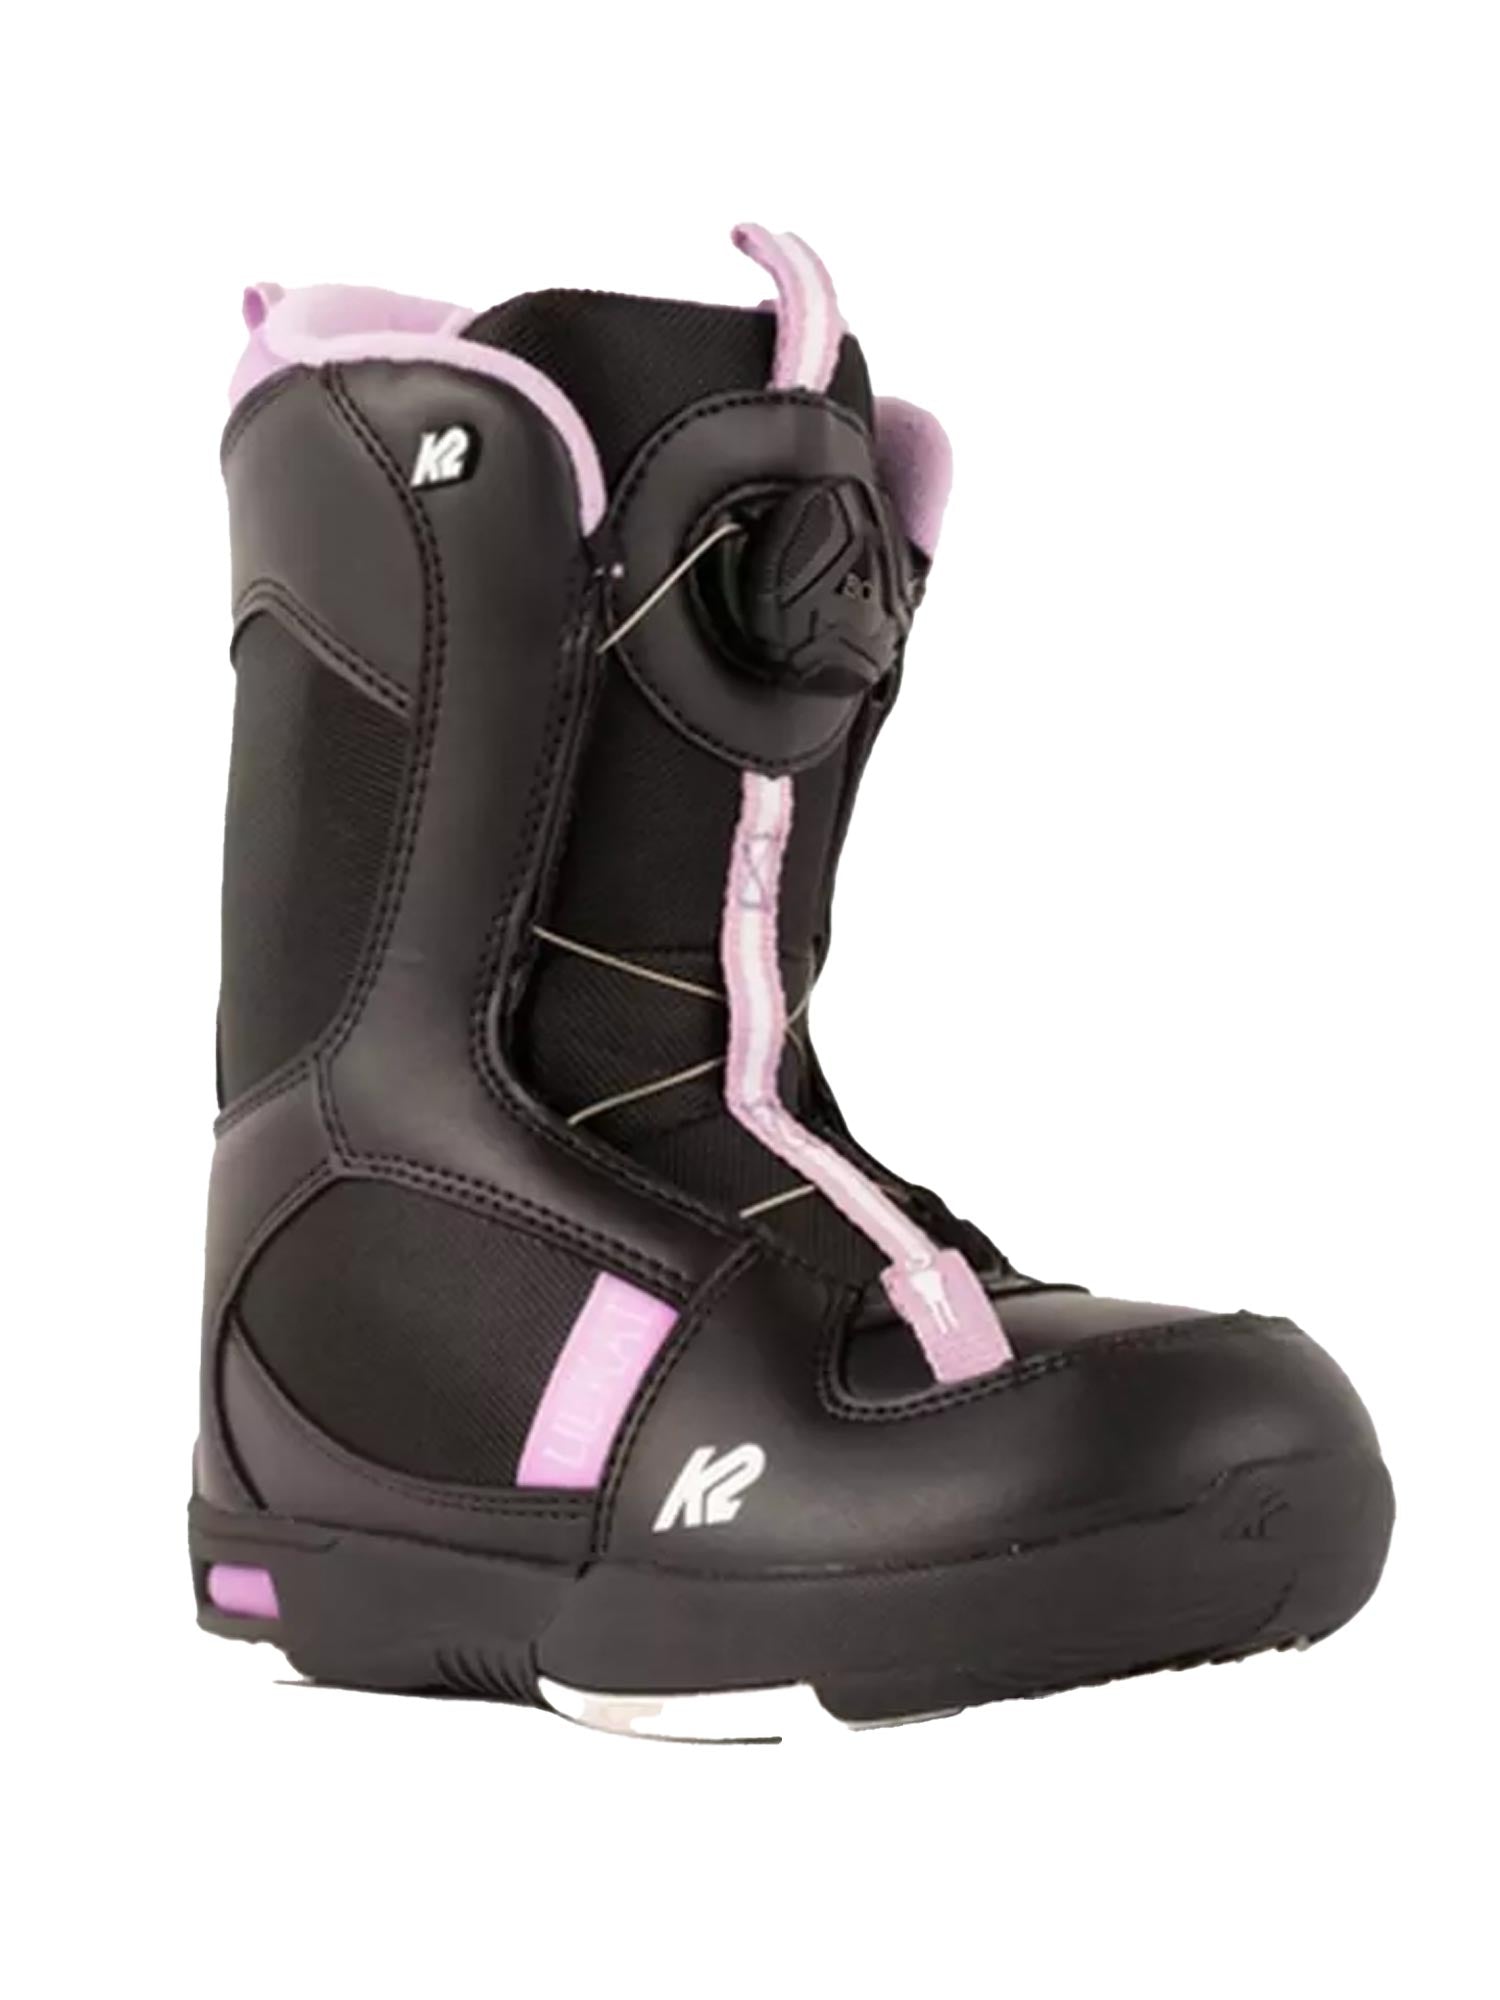 K2 Lil Kat kids snowboard boots, black with purple accents